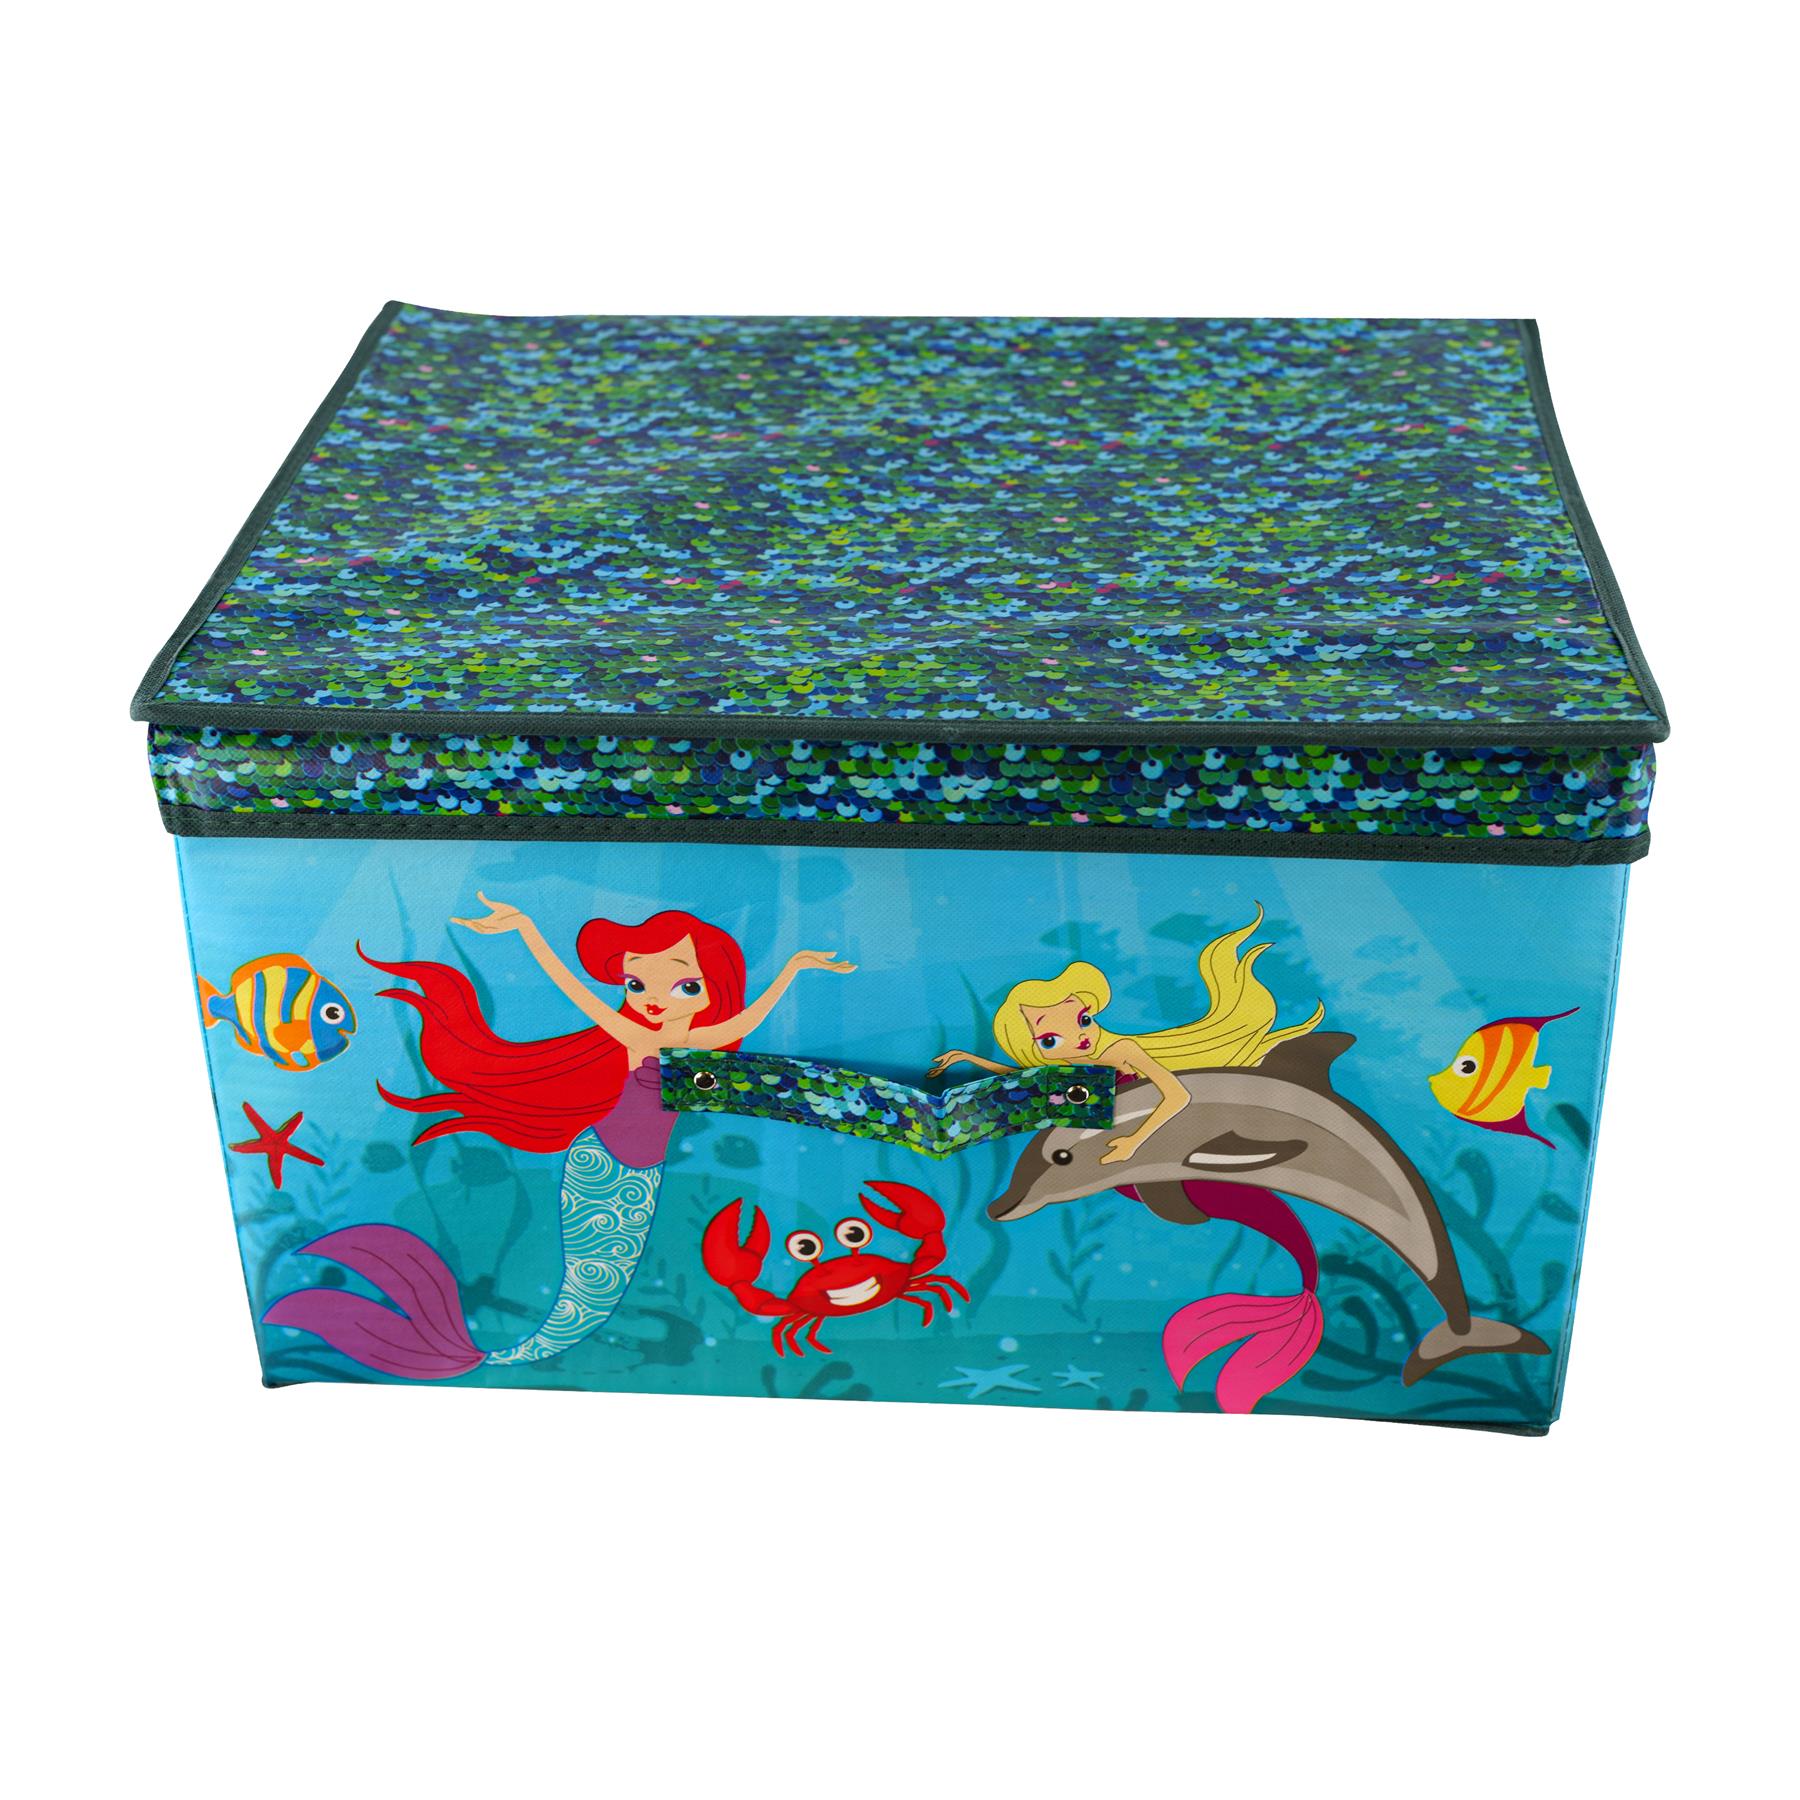 Marmaid Storage Box by The Magic Toy Shop - UKBuyZone